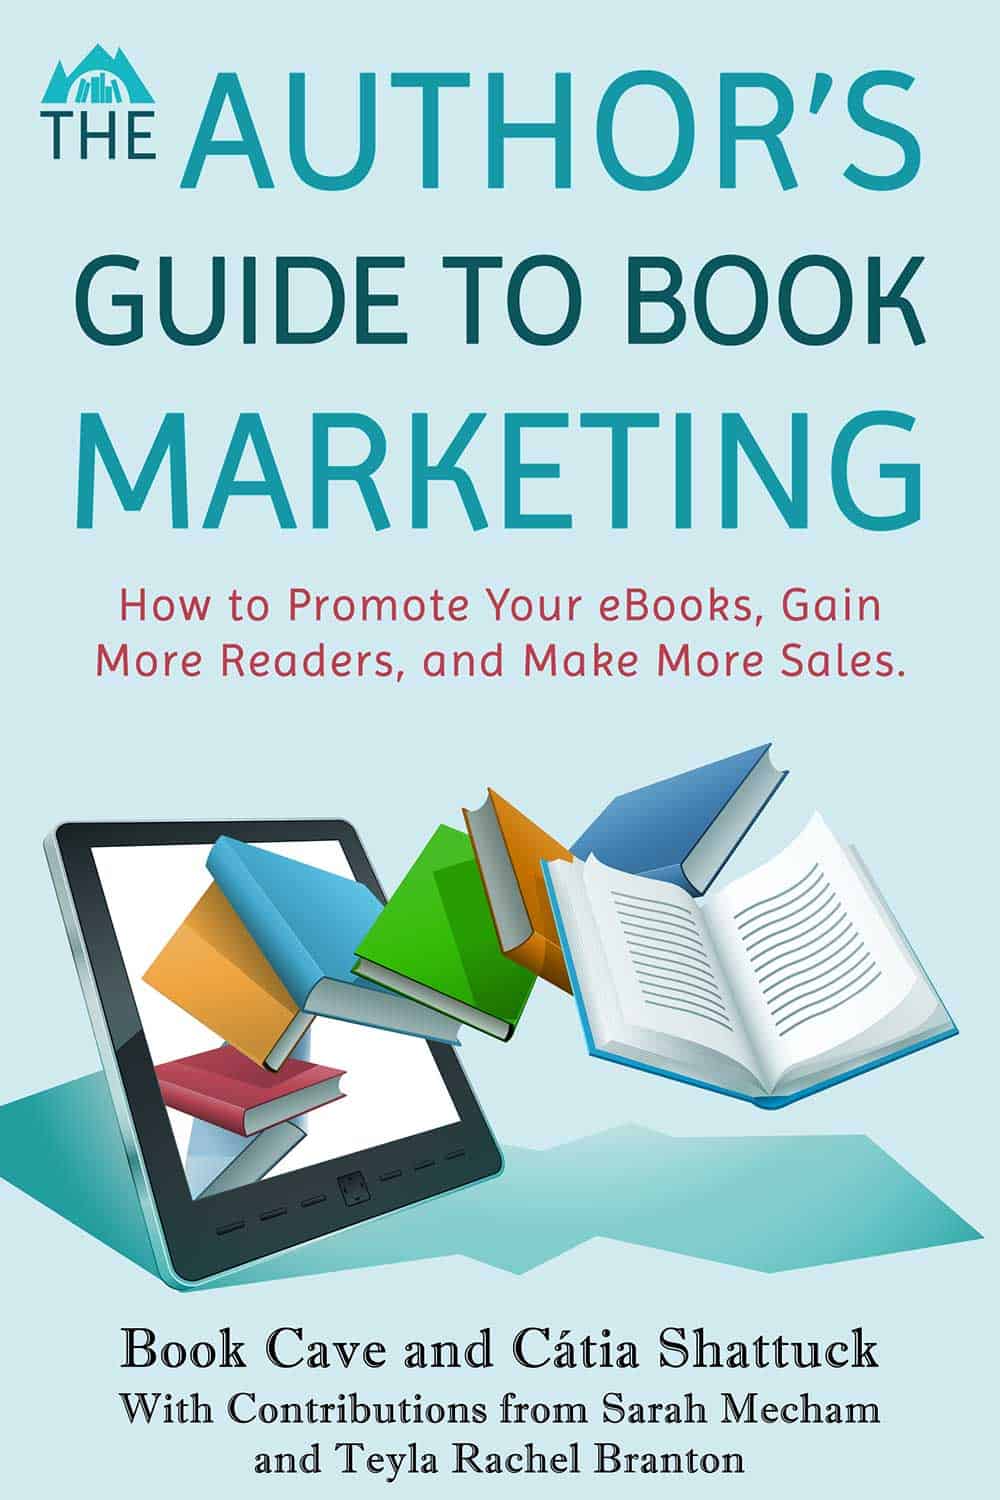 the ebook marketing guide